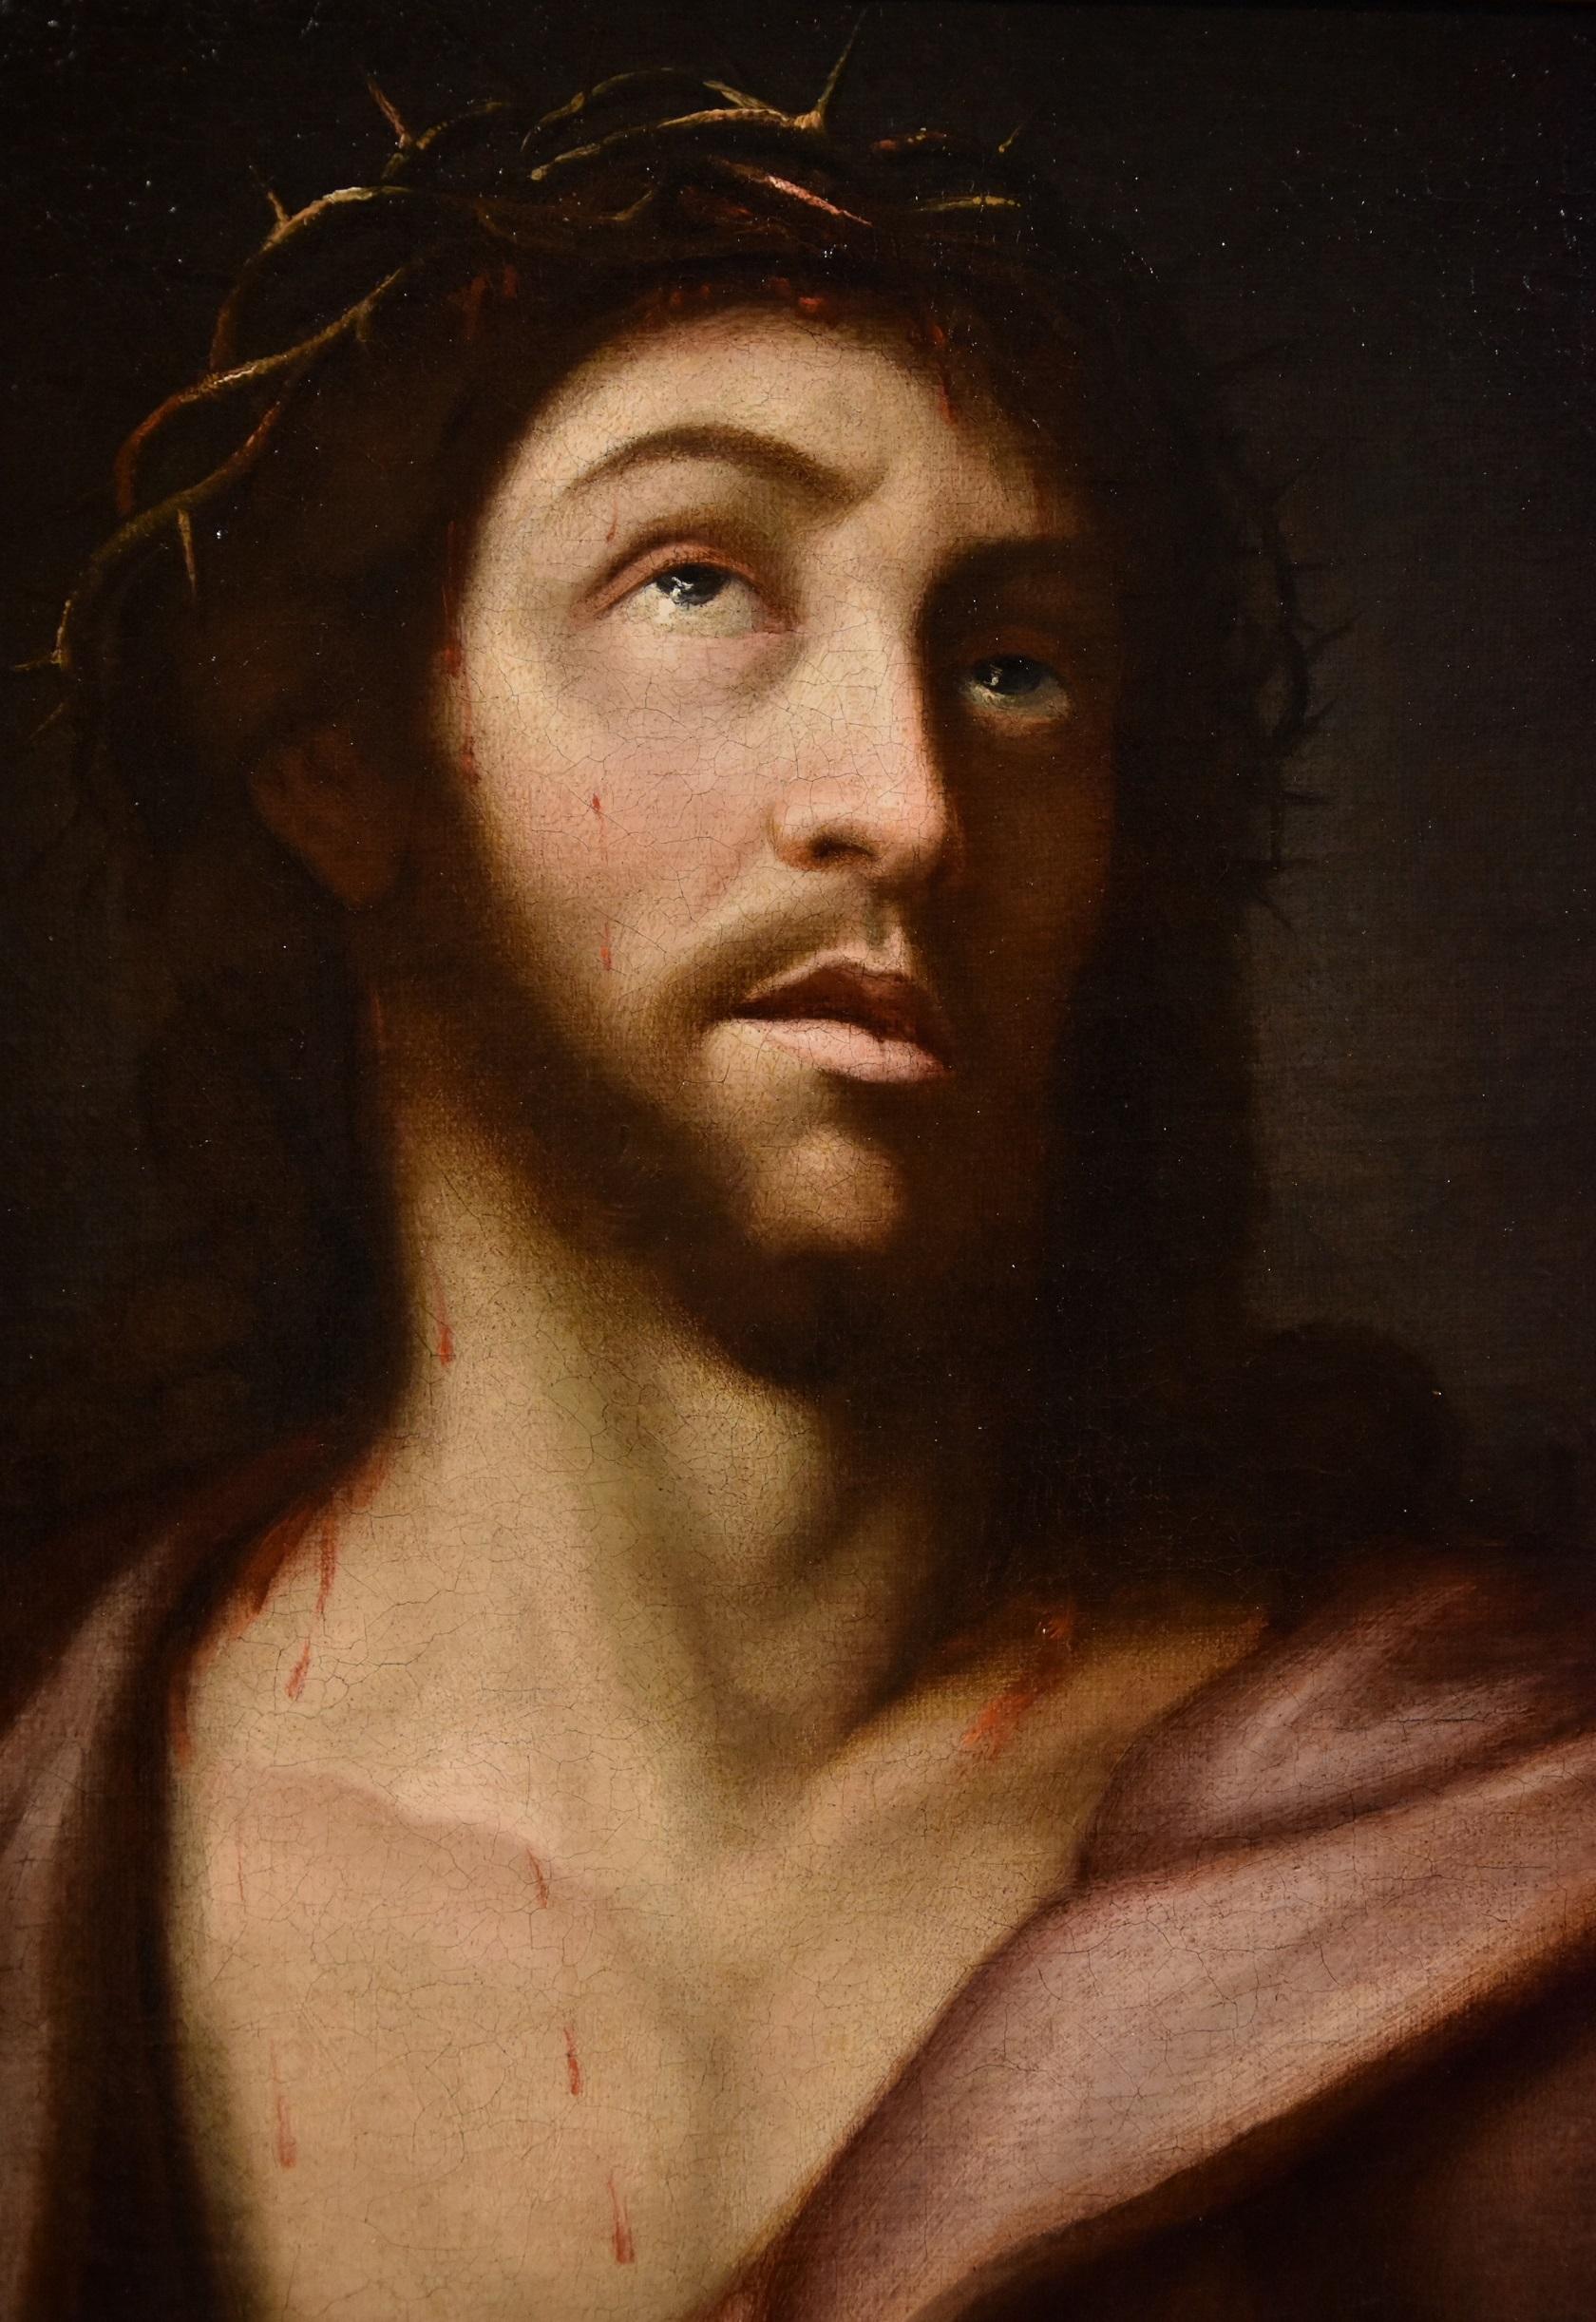 Ecce Homo Christ, Gemälde auf Leinwand, 17. Jahrhundert, Alter Meister Leonardo  (Braun), Portrait Painting, von Lombard painter of the 17th century